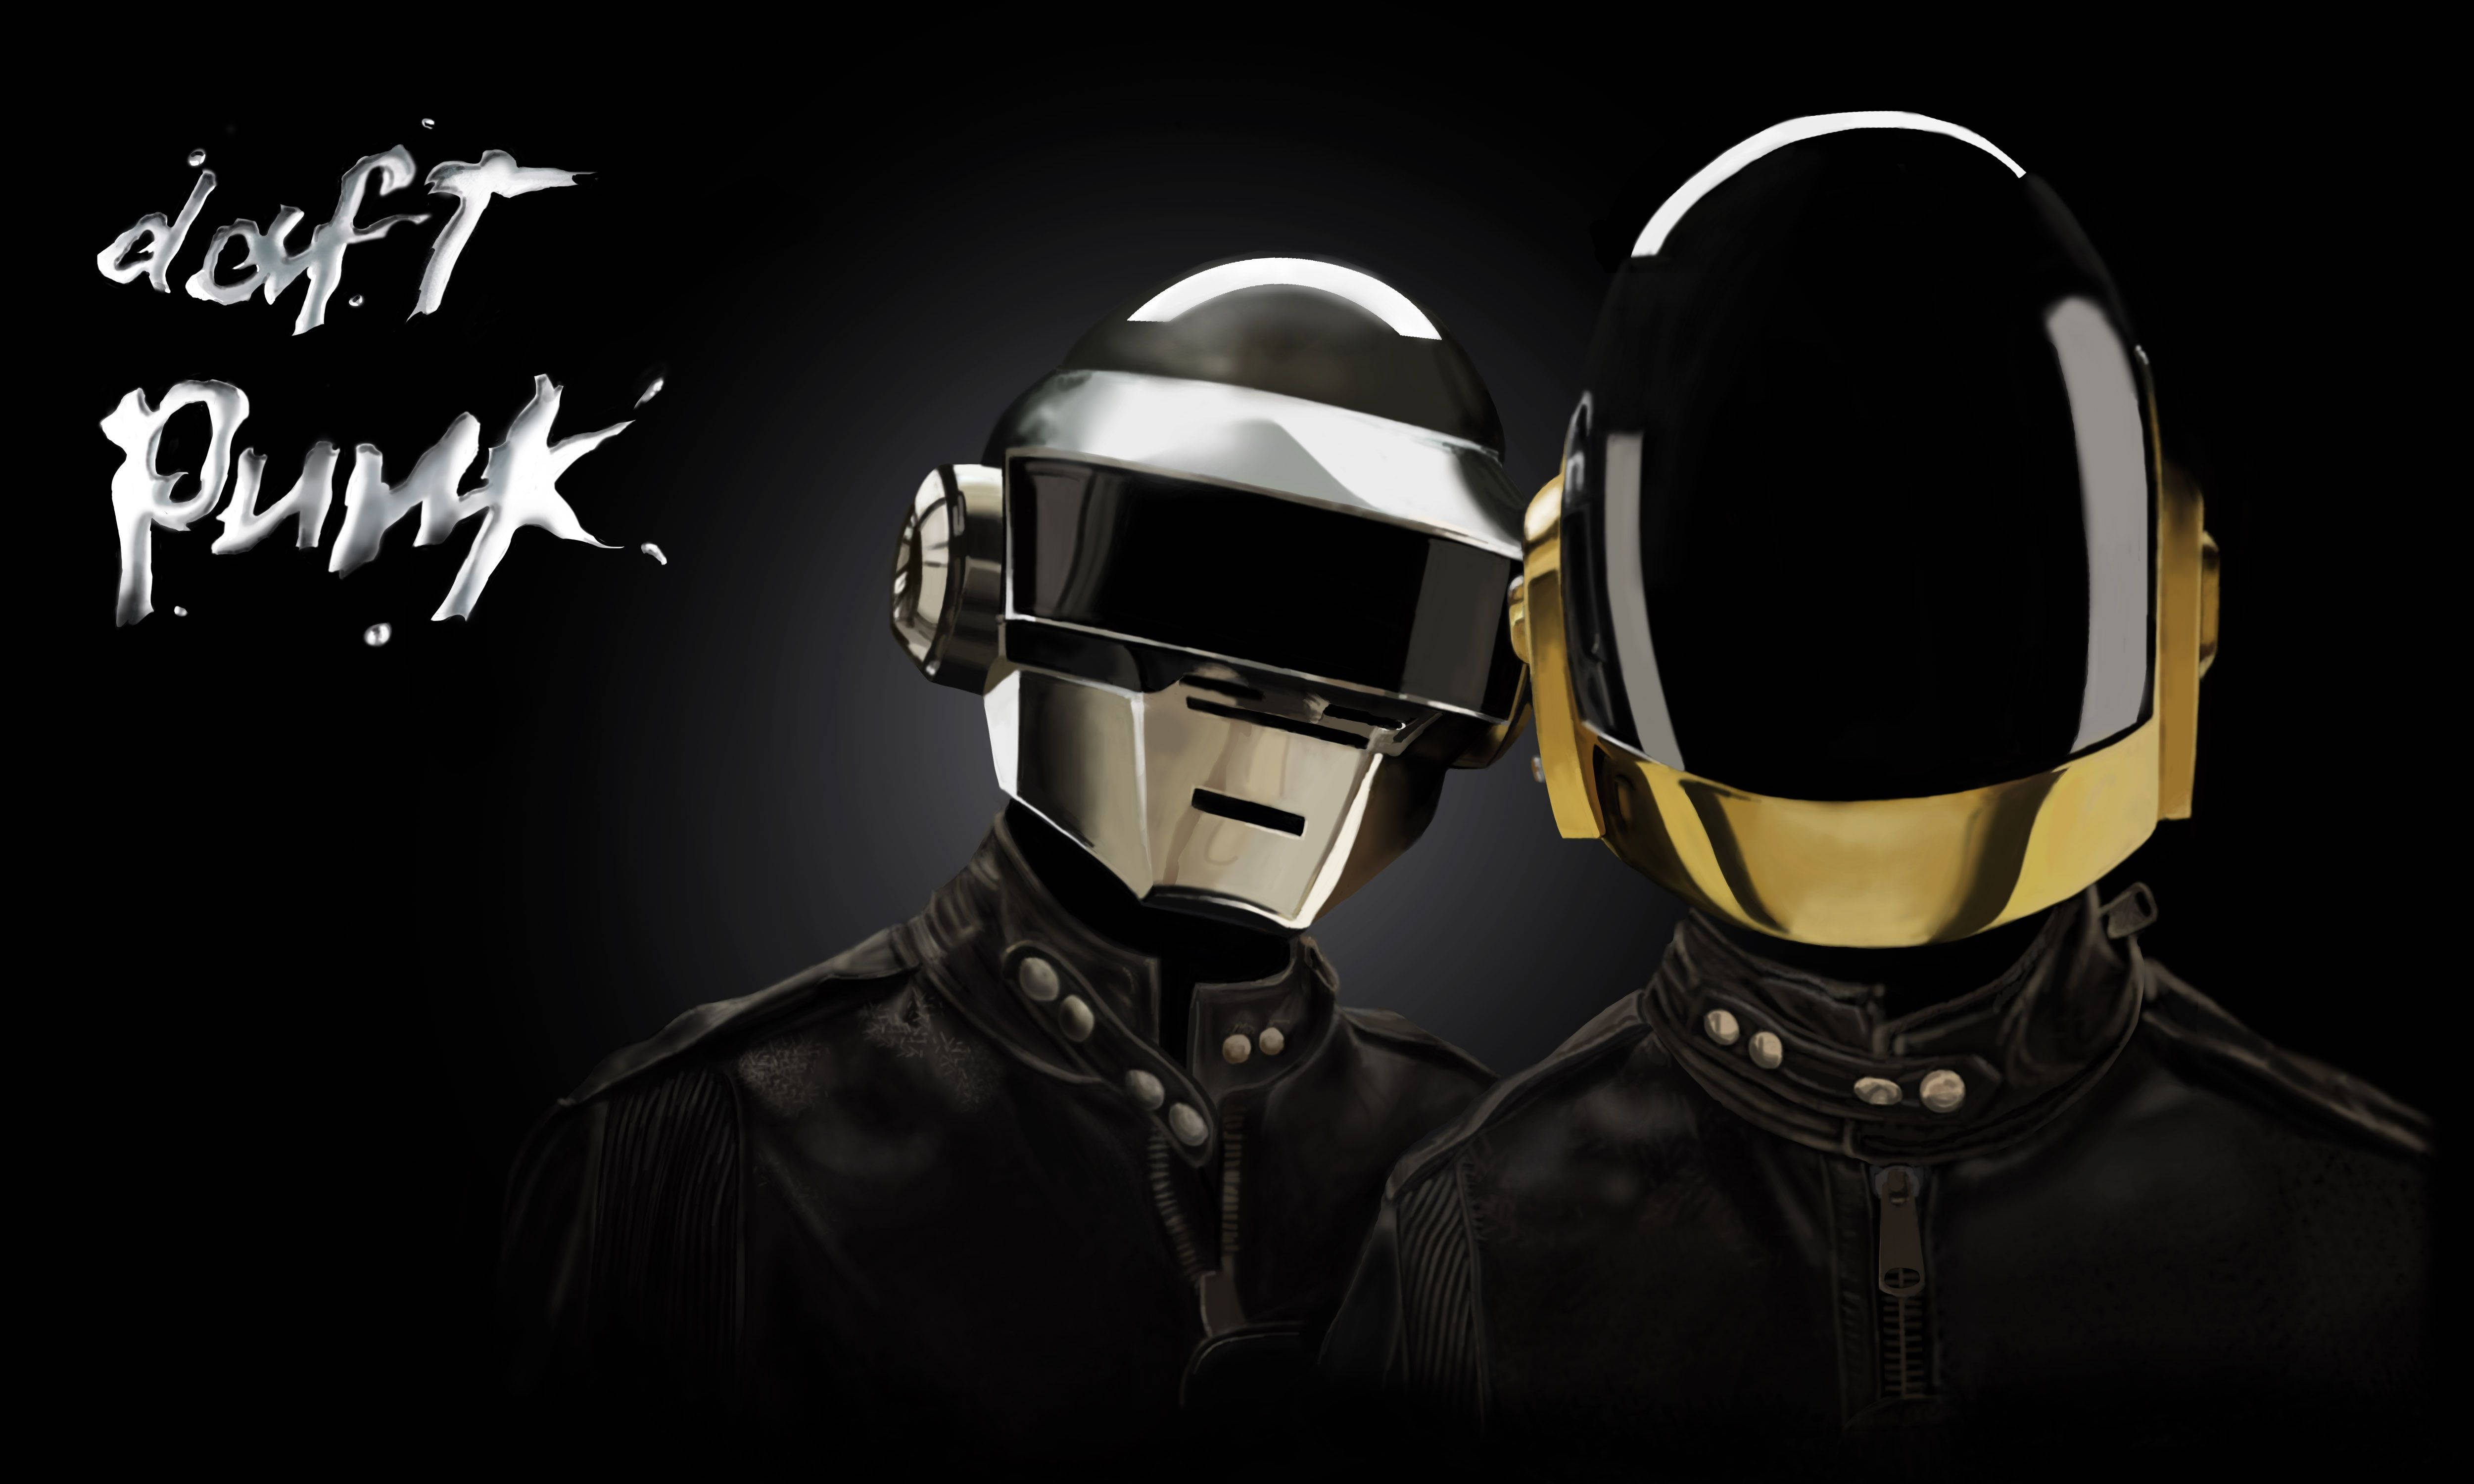 Classic Daft Punk Sci-fi Helmets Background